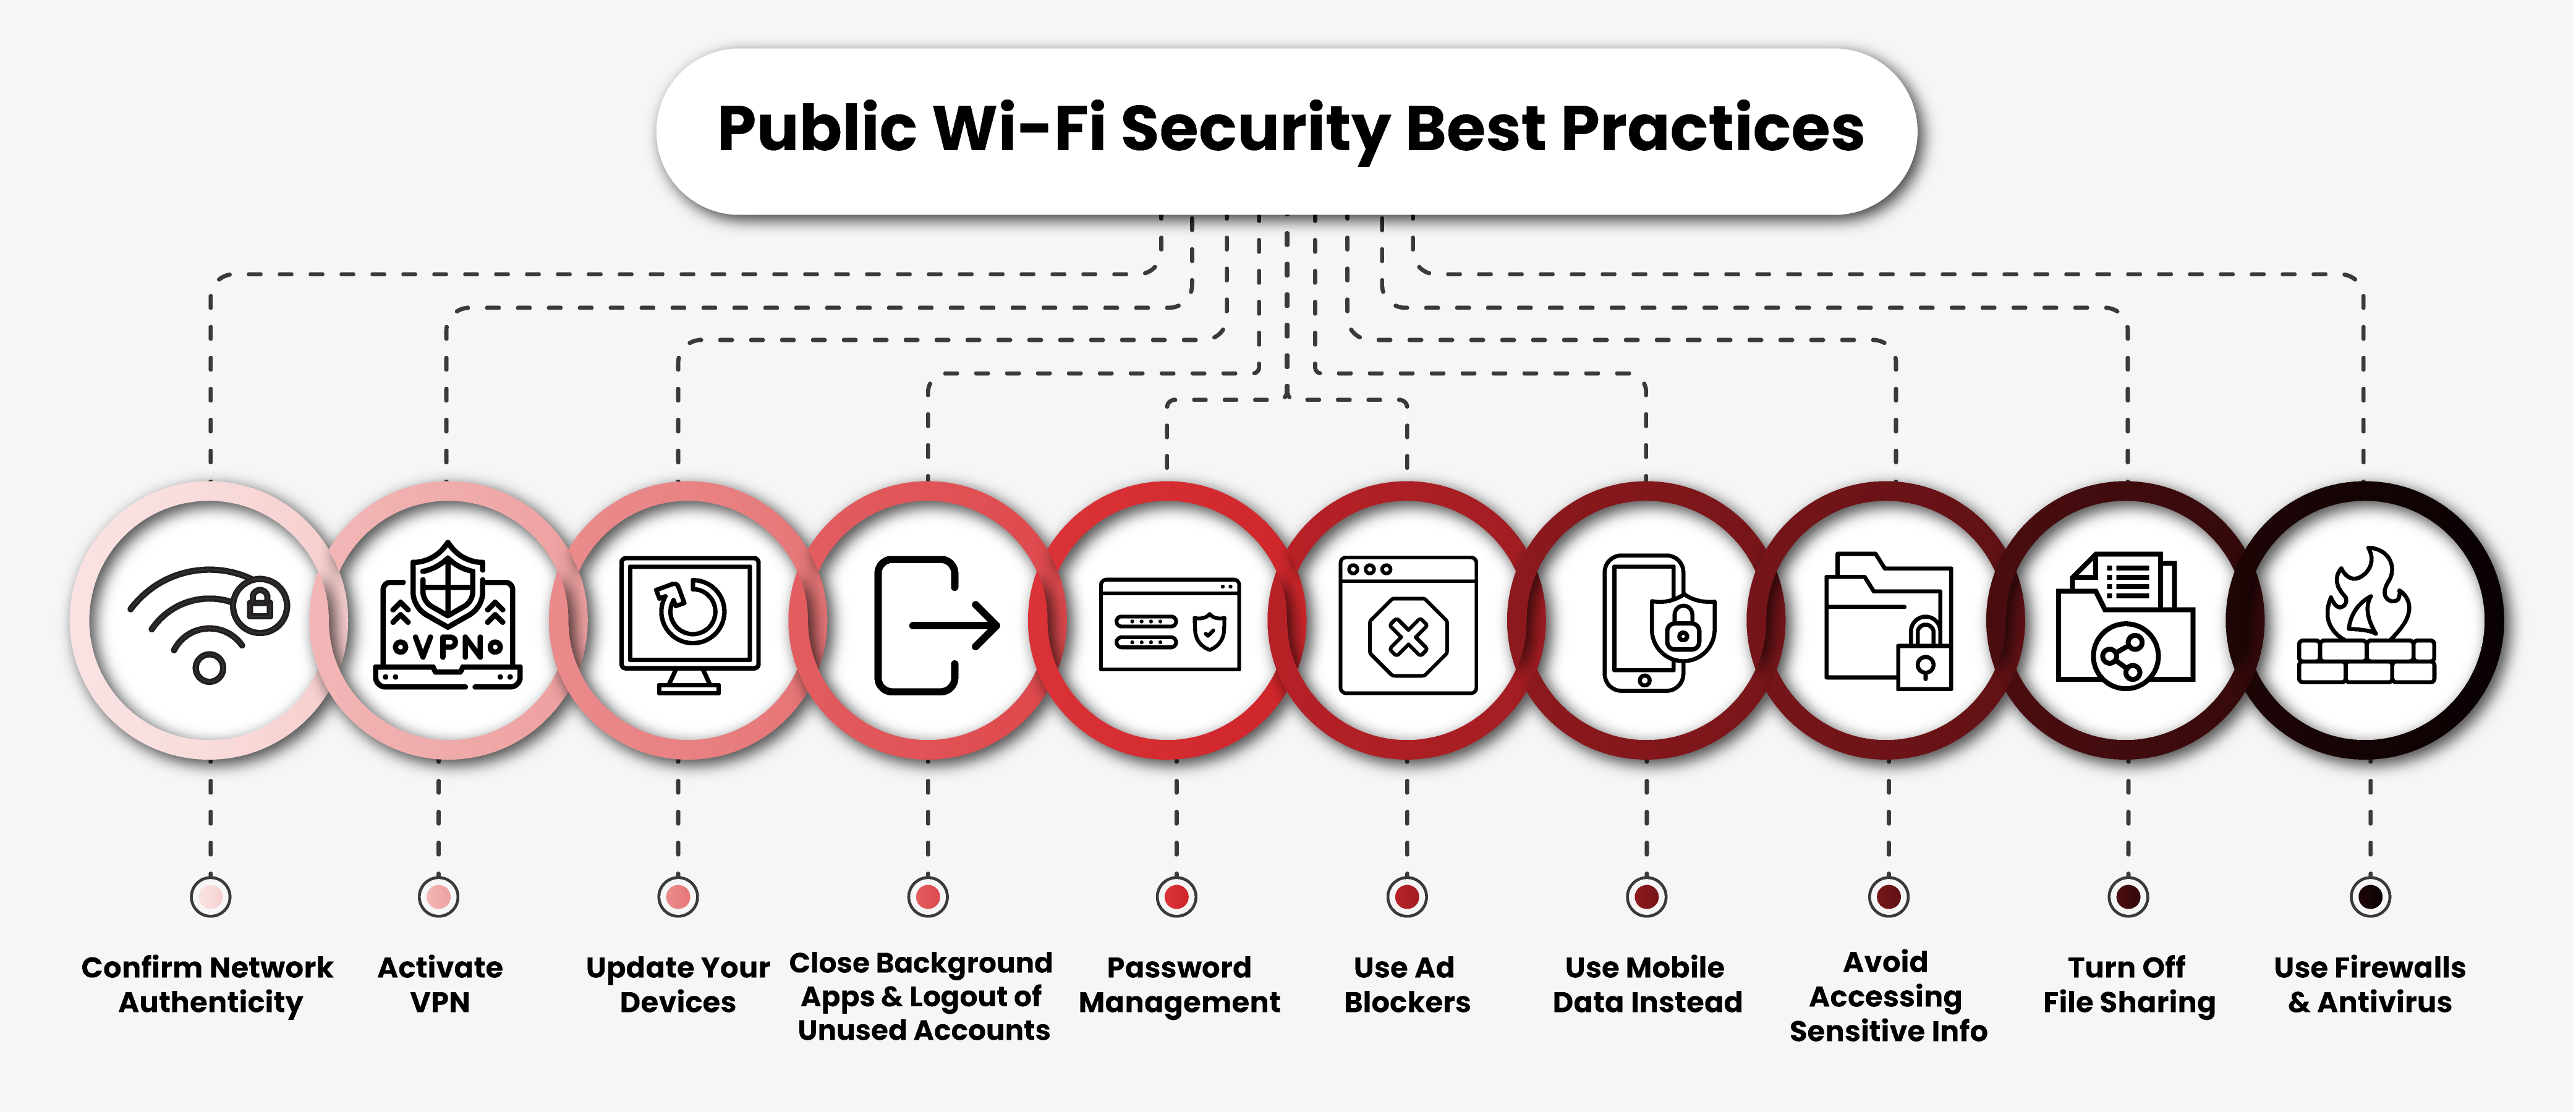 Public Wi-Fi Security Best Practices